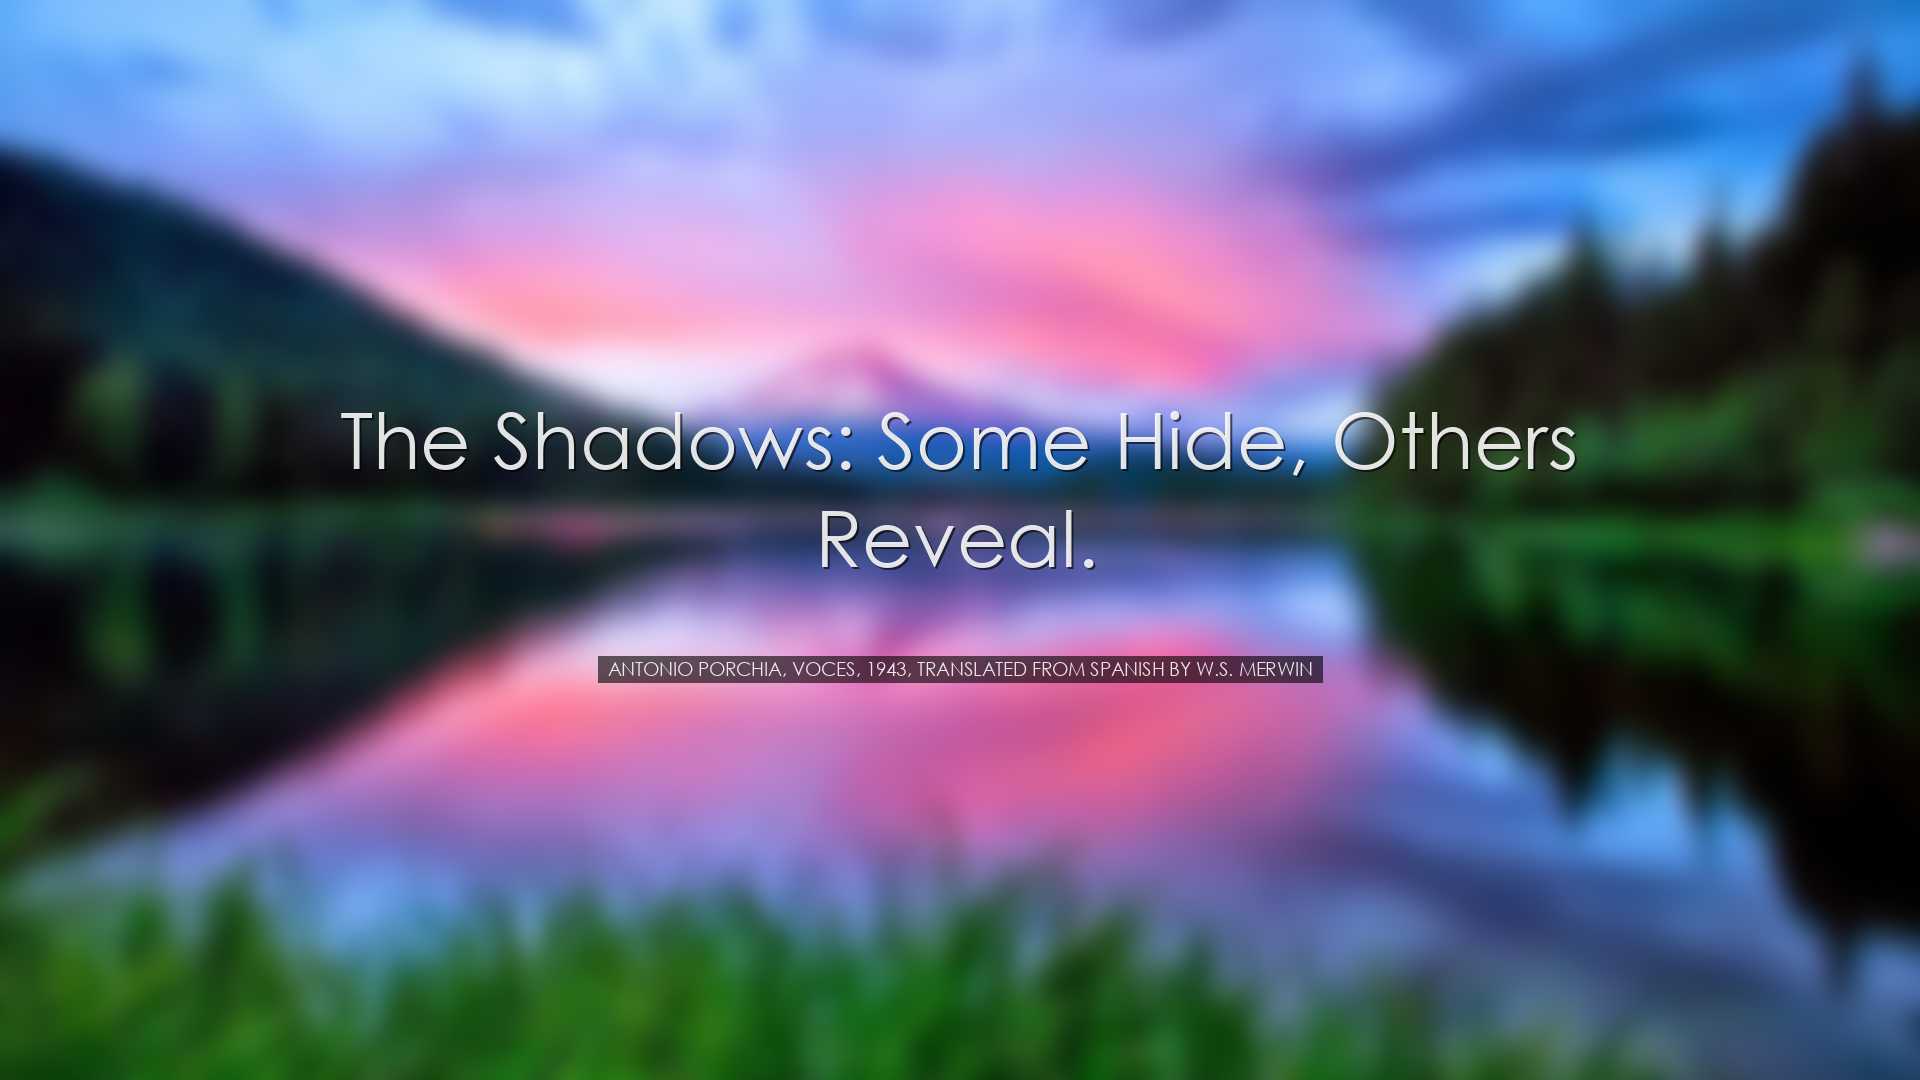 The shadows: some hide, others reveal. - Antonio Porchia, Voces, 1